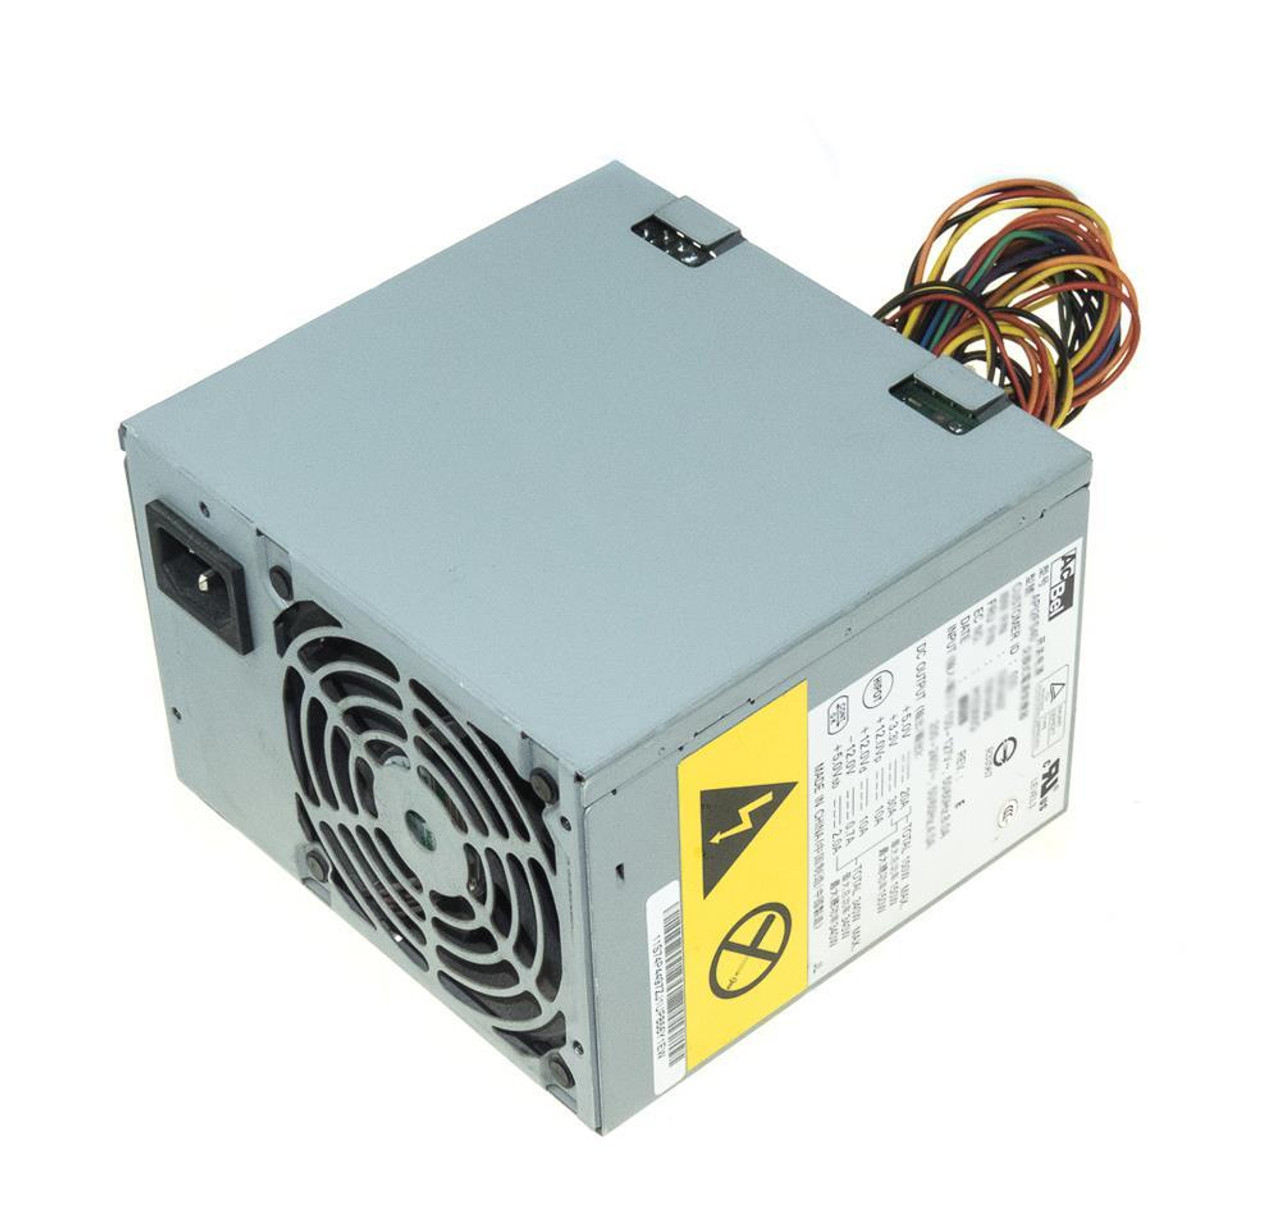 00N7714-06 IBM 340-Watts ATX Power Supply for xSeries Server